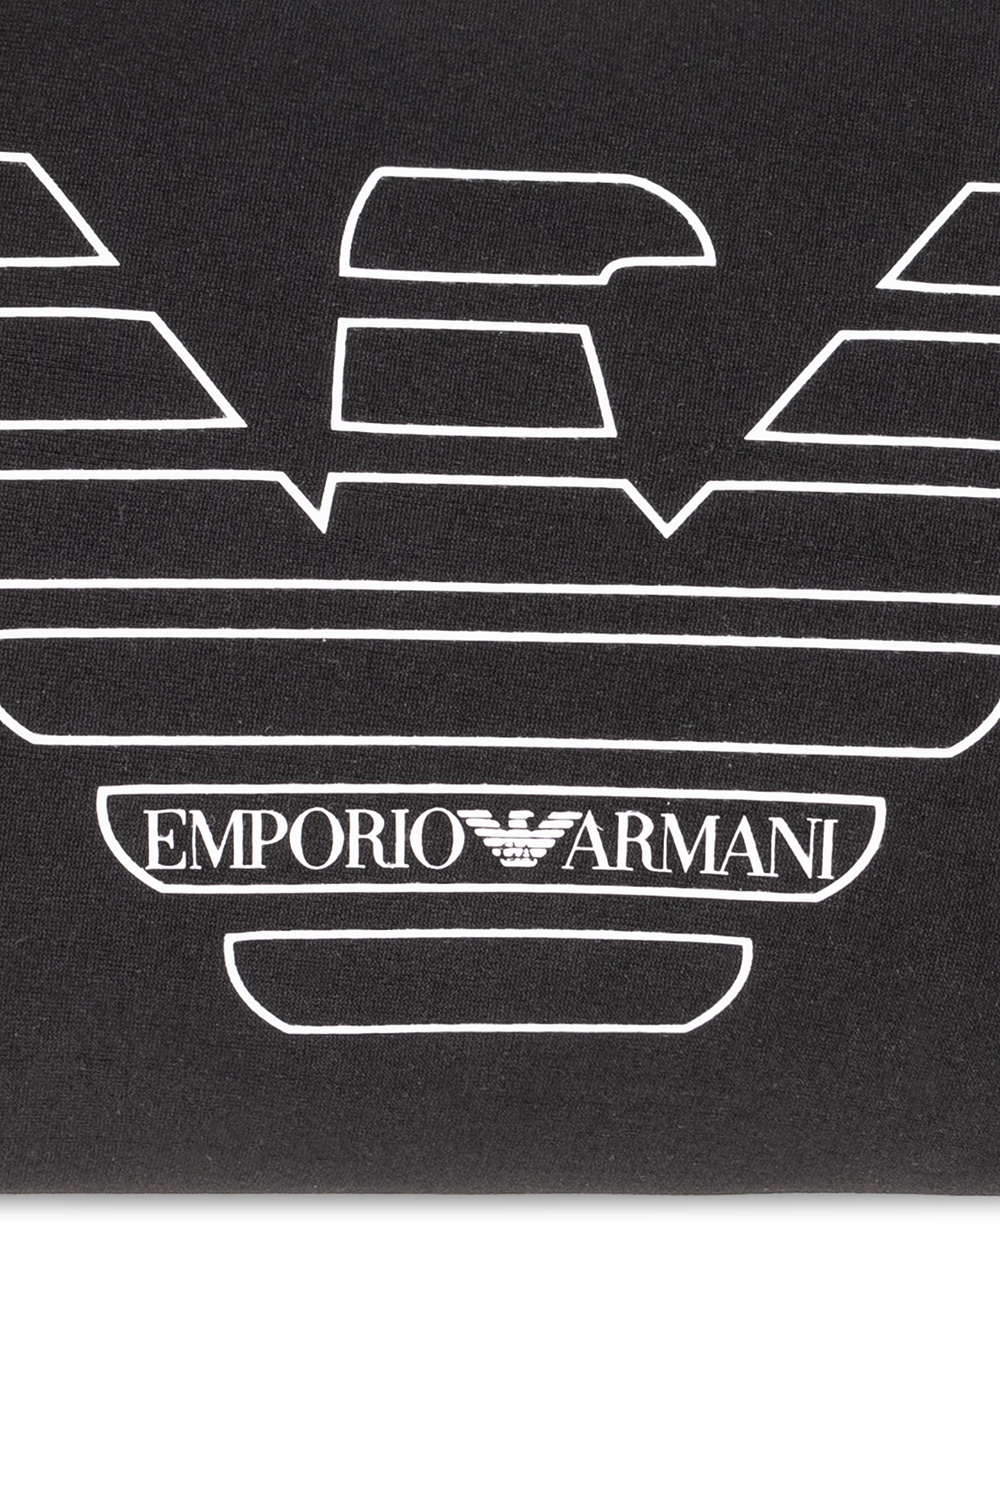 Emporio Armani Emporio Armani quilted high-neck gilet